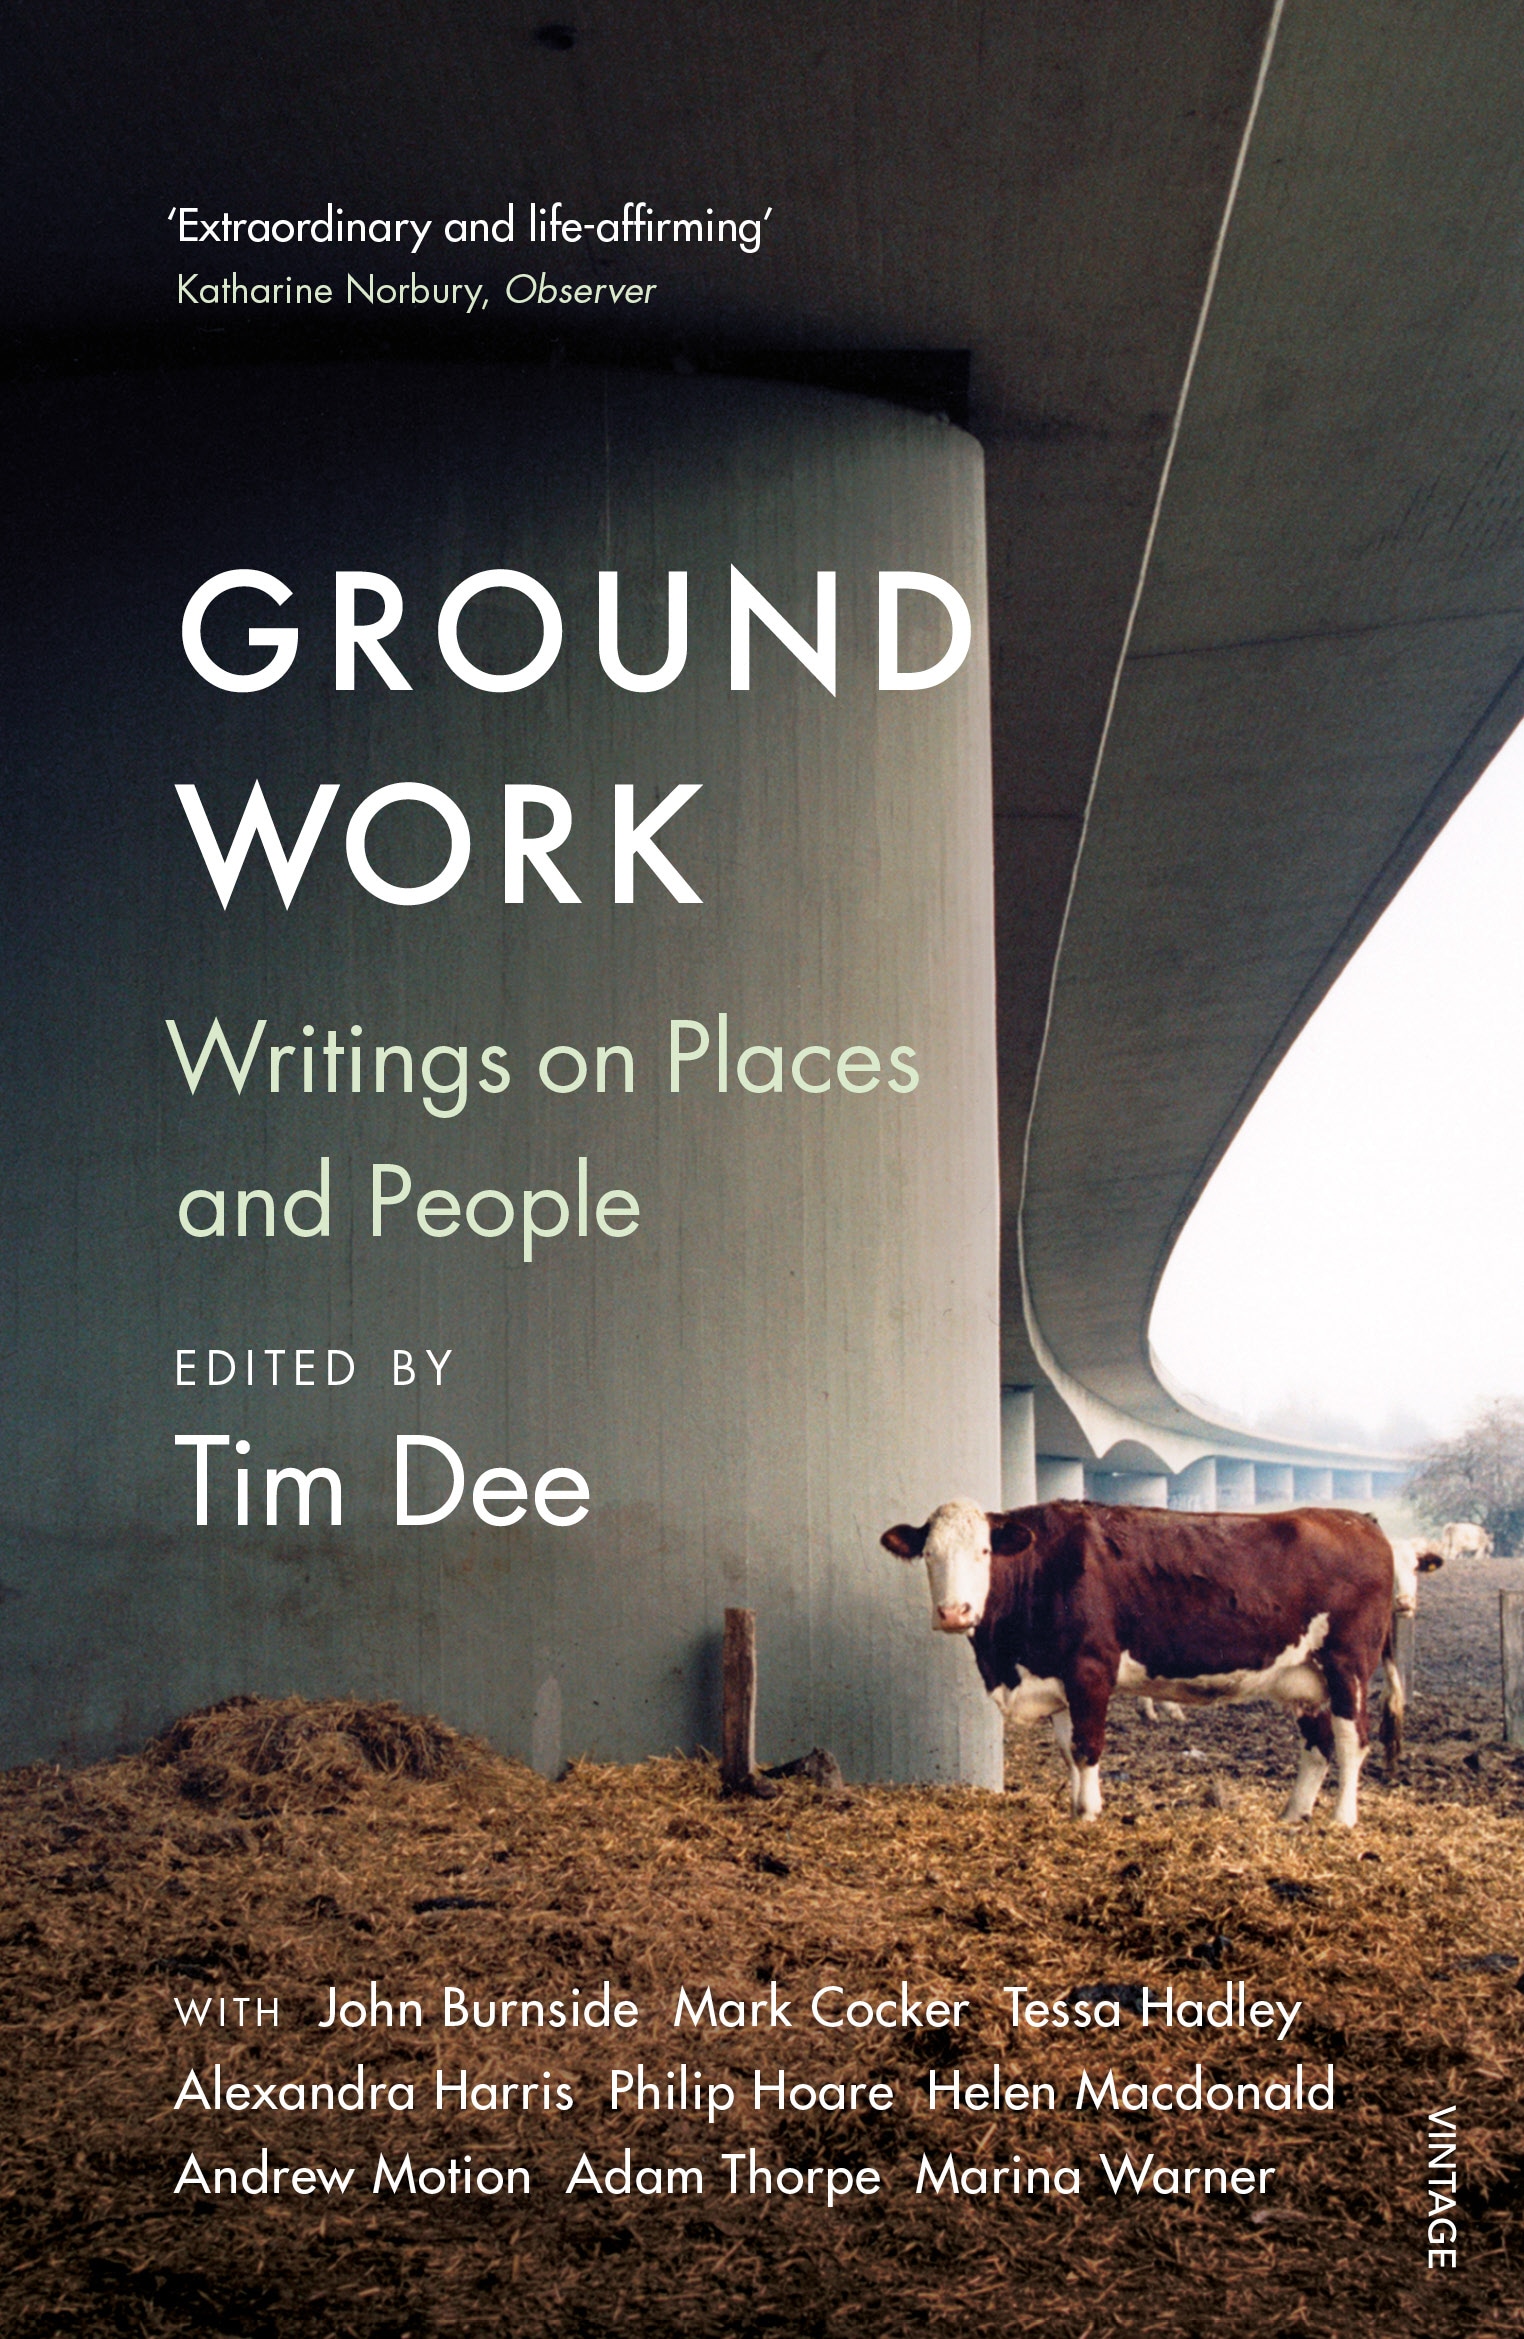 Book “Ground Work” by Tim Dee — March 7, 2019